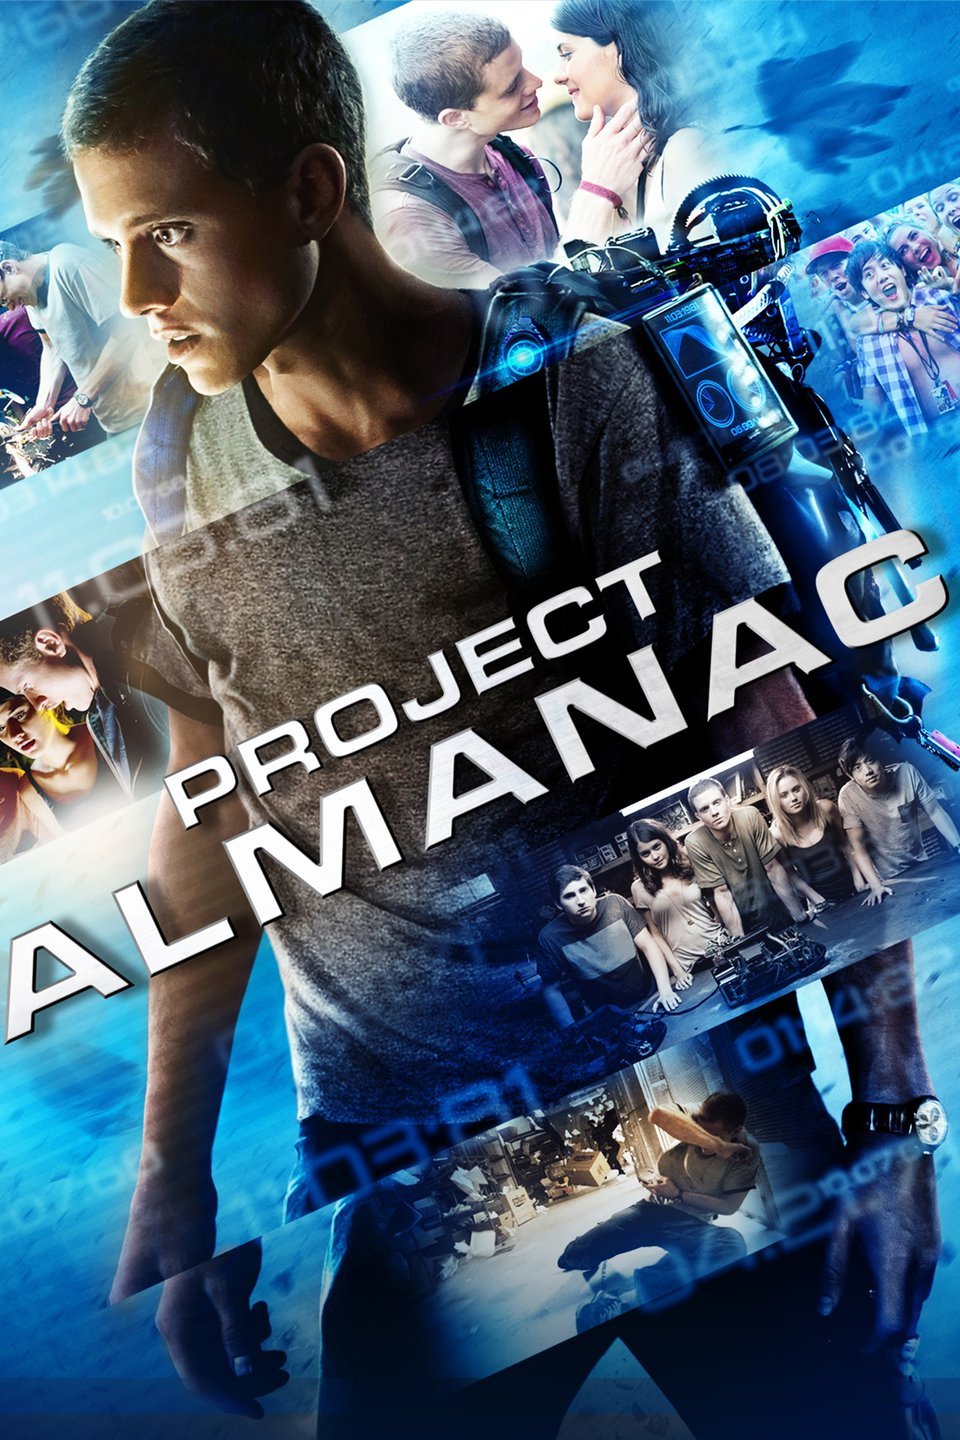 [MINI Super-HQ] Project Almanac (2014) กล้า ซ่าส์ ท้าเวลา [1080p] [พากย์ไทย 5.1 + เสียงอังกฤษ DTS] [บรรยายไทย + อังกฤษ] [เสียงไทย + ซับไทย] [PANDAFILE]